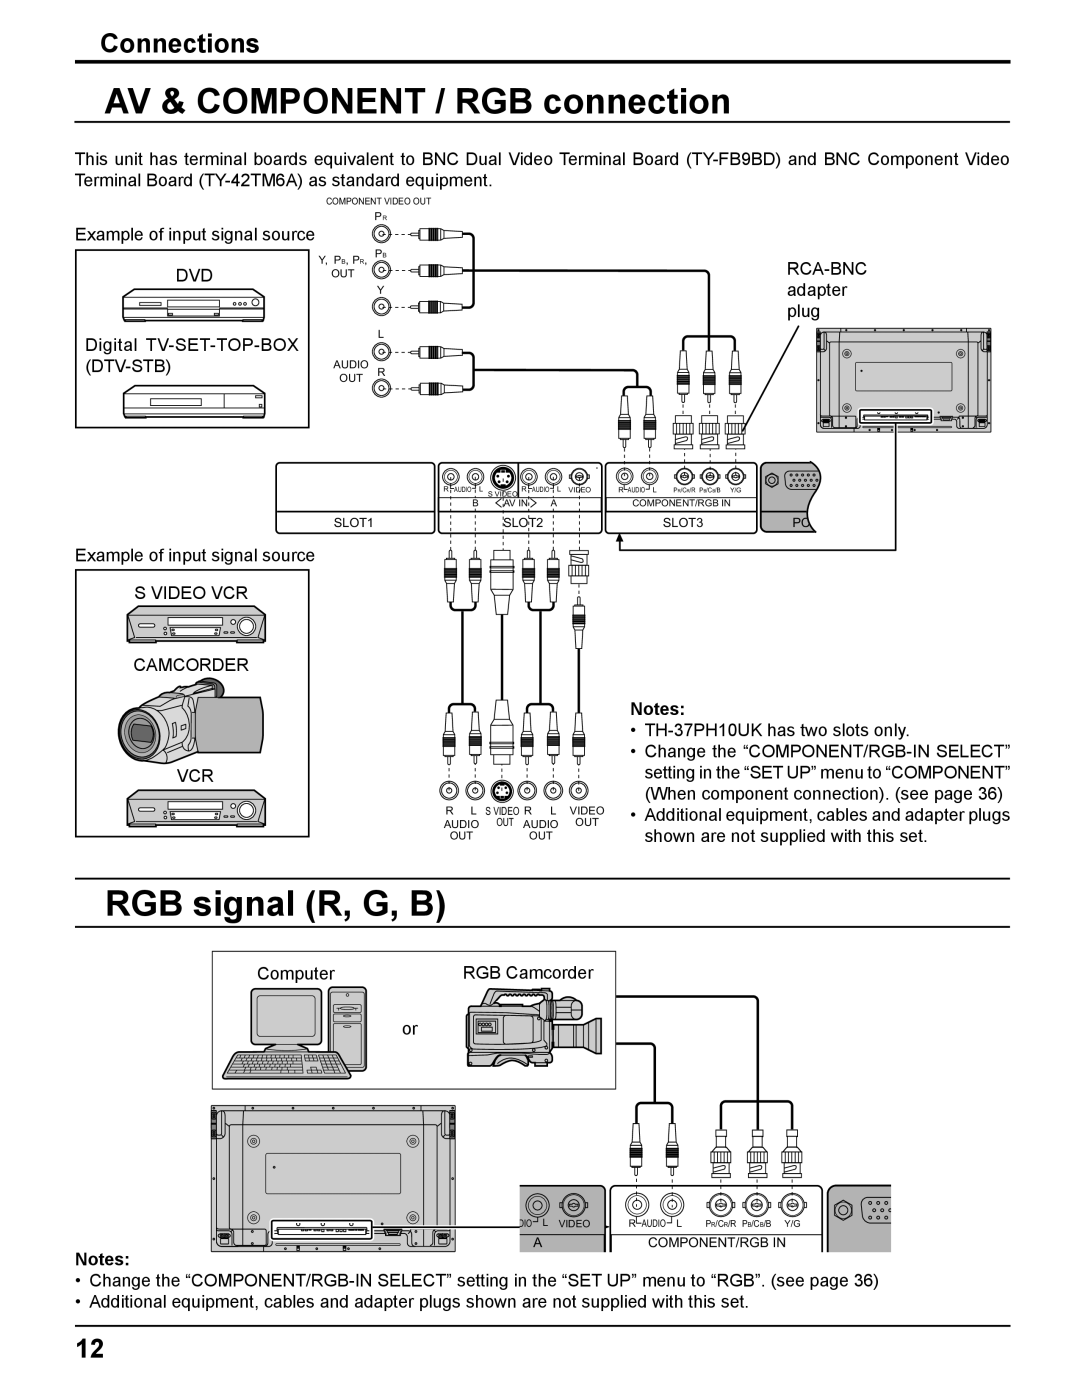 Panasonic TH-37PH10UK AV & COMPONENT / RGB connection, RGB signal R, G, B, Connections, SLOT1, SLOT2, Component/Rgb In 